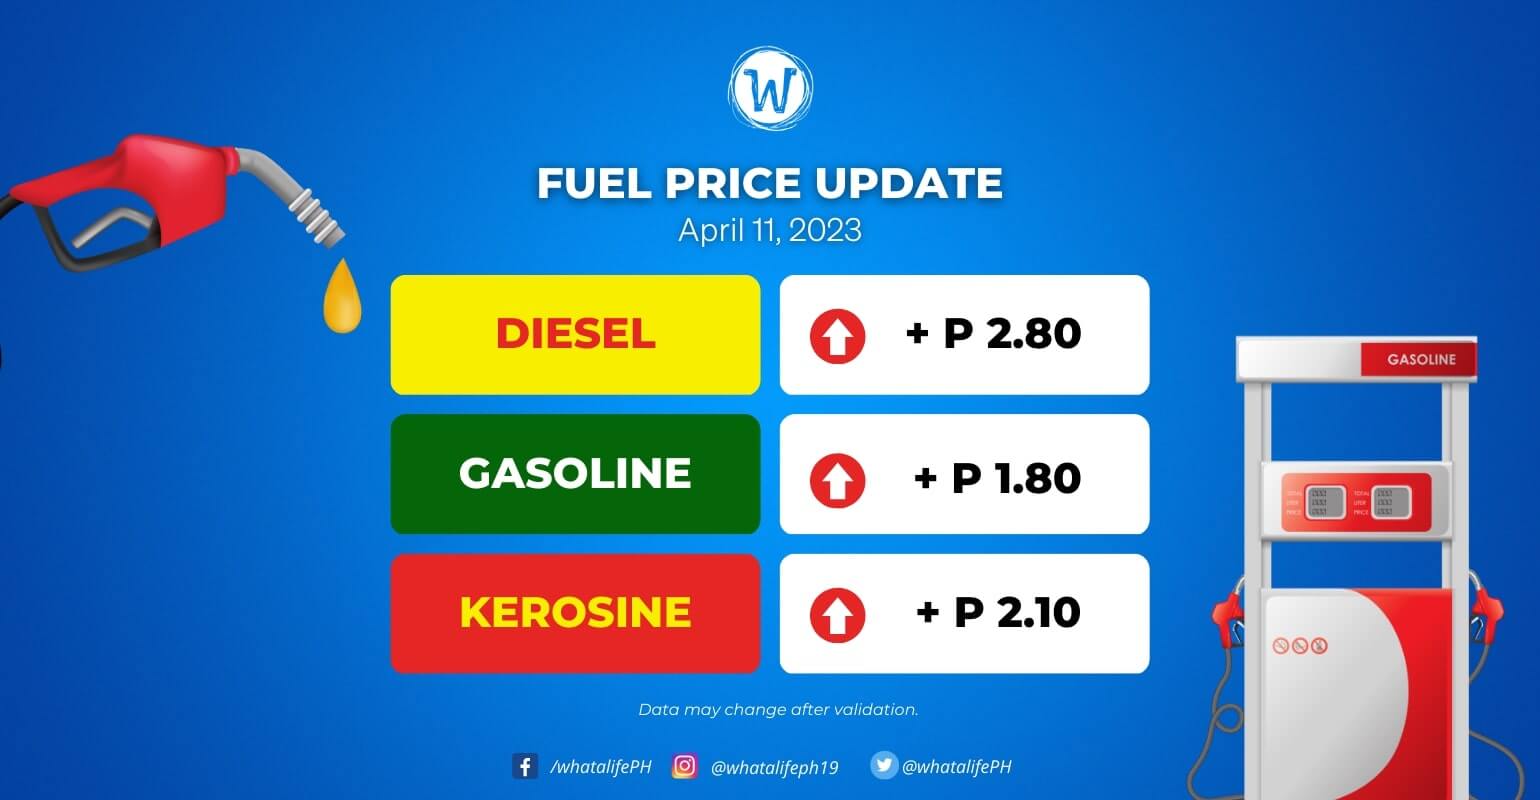 Fuel price adjustment effective April 11, 2023